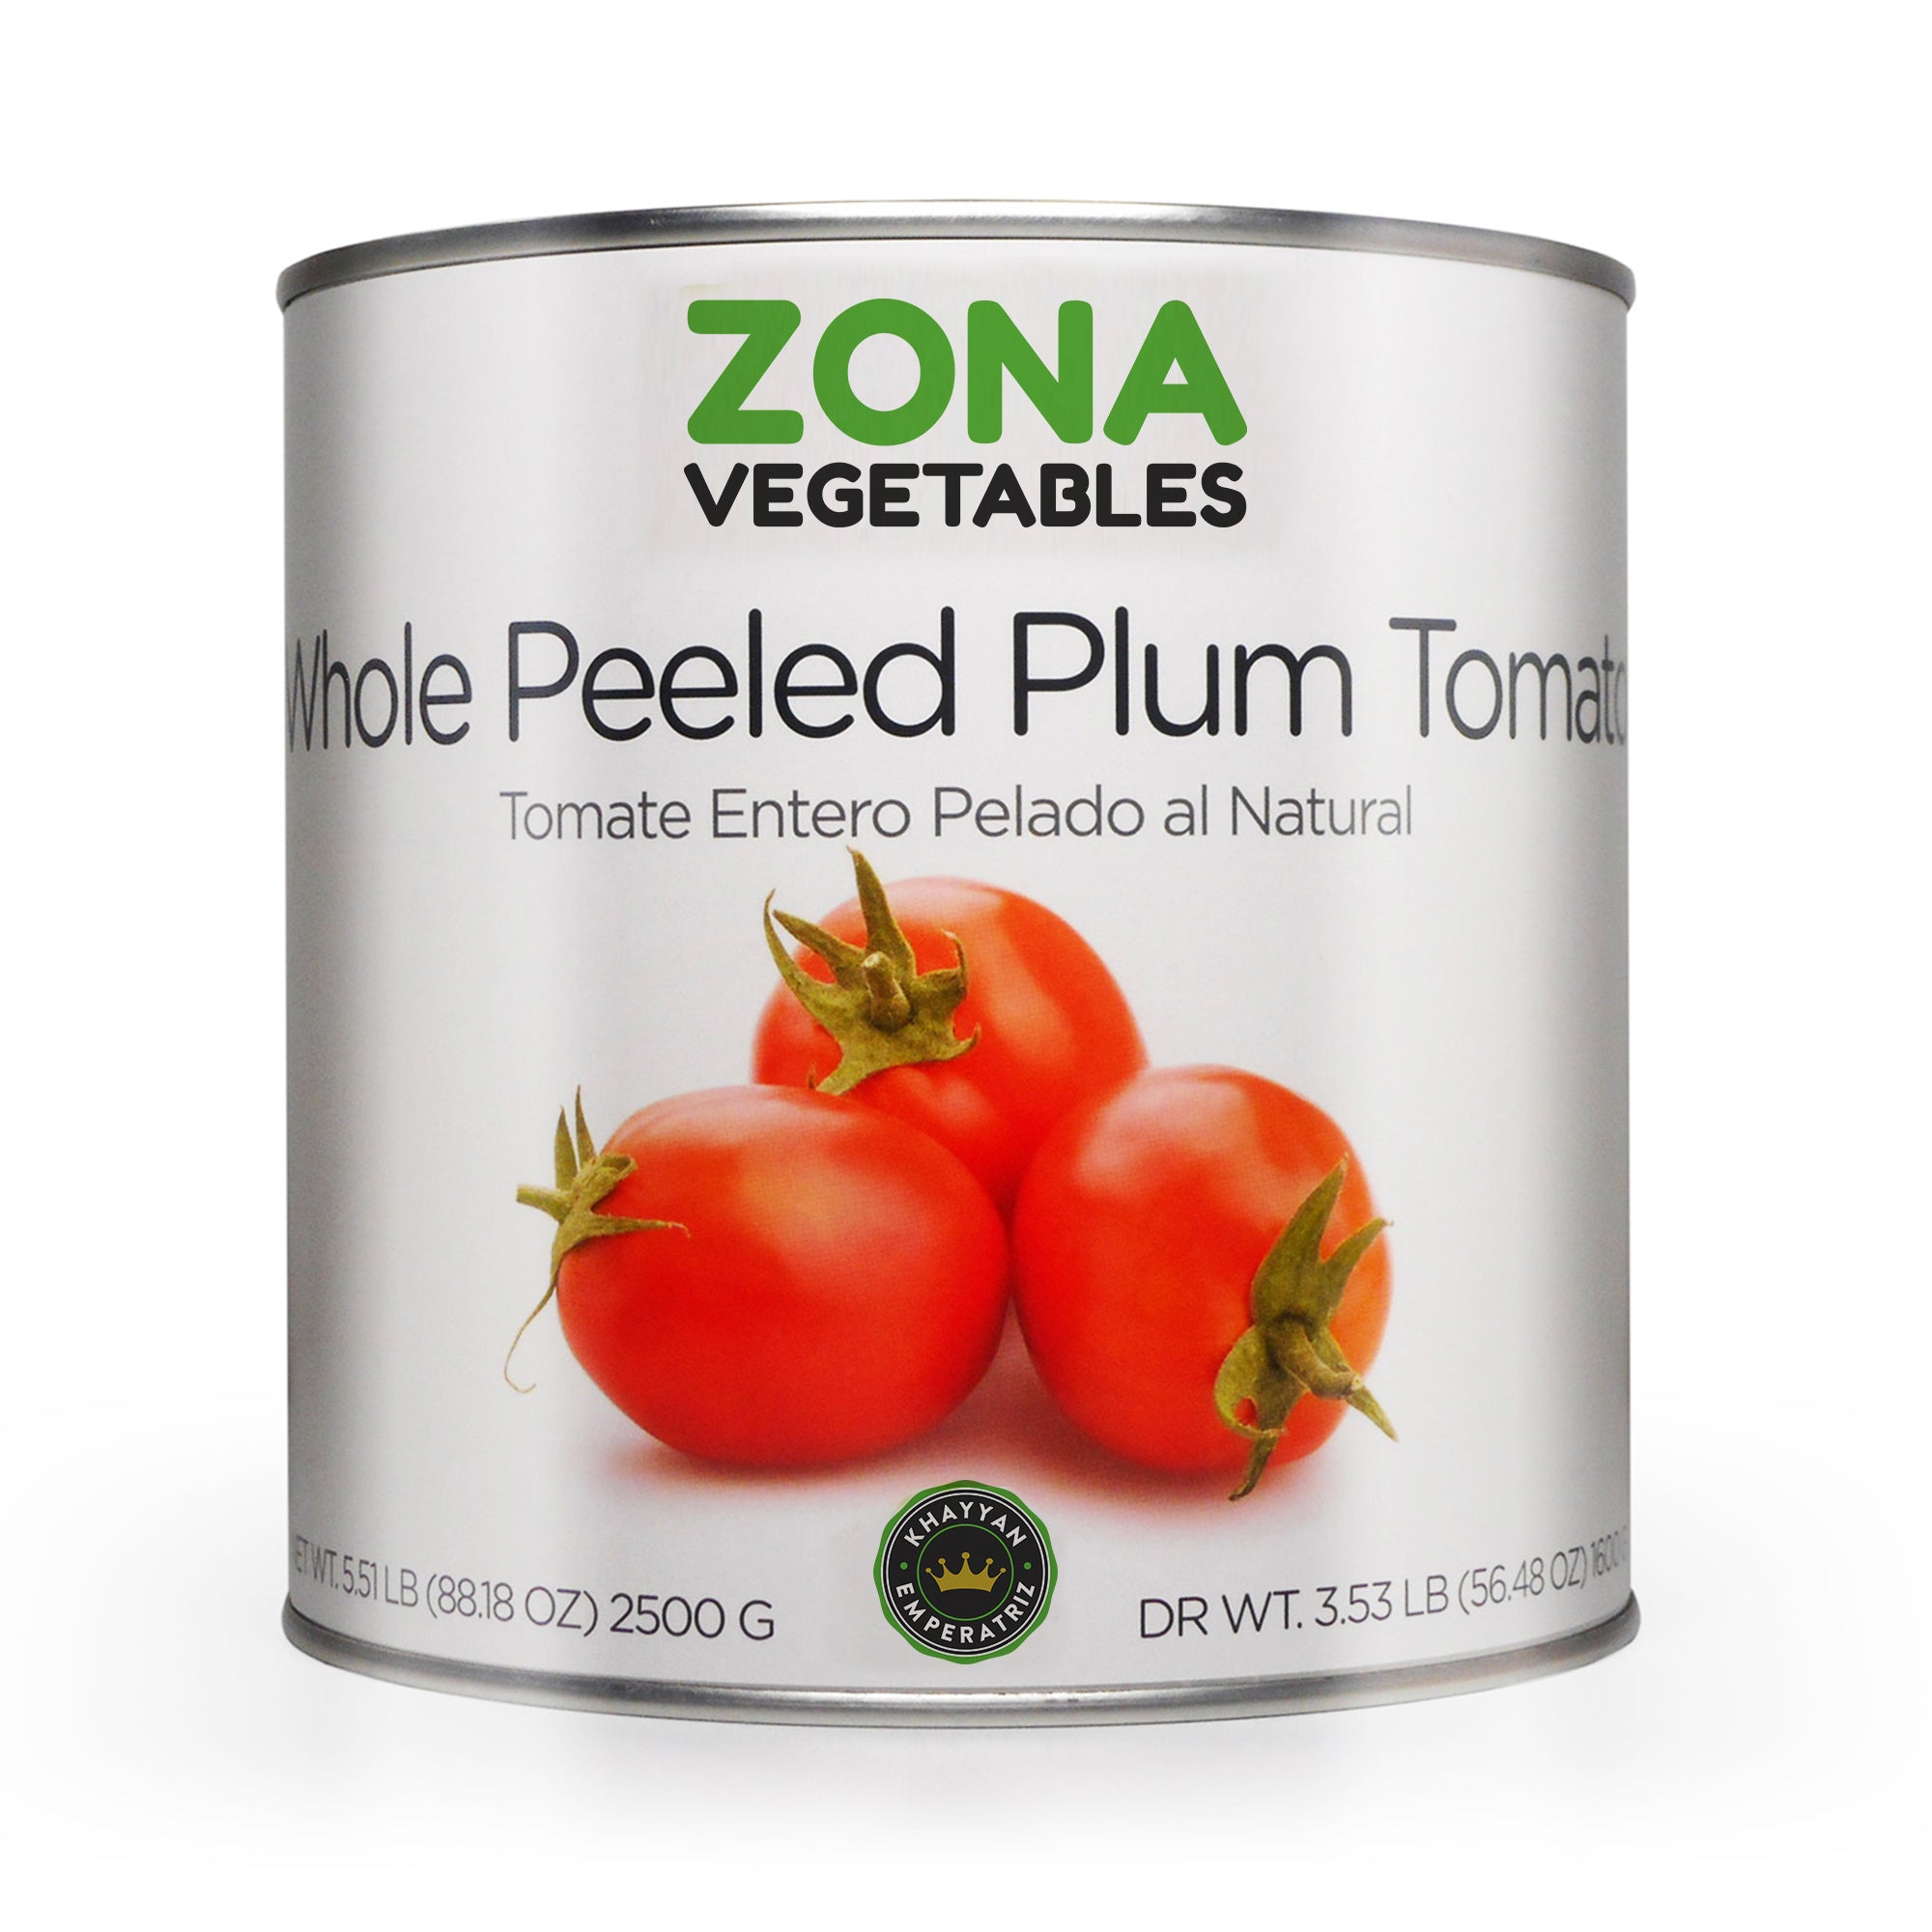 Whole Plumb Tomato